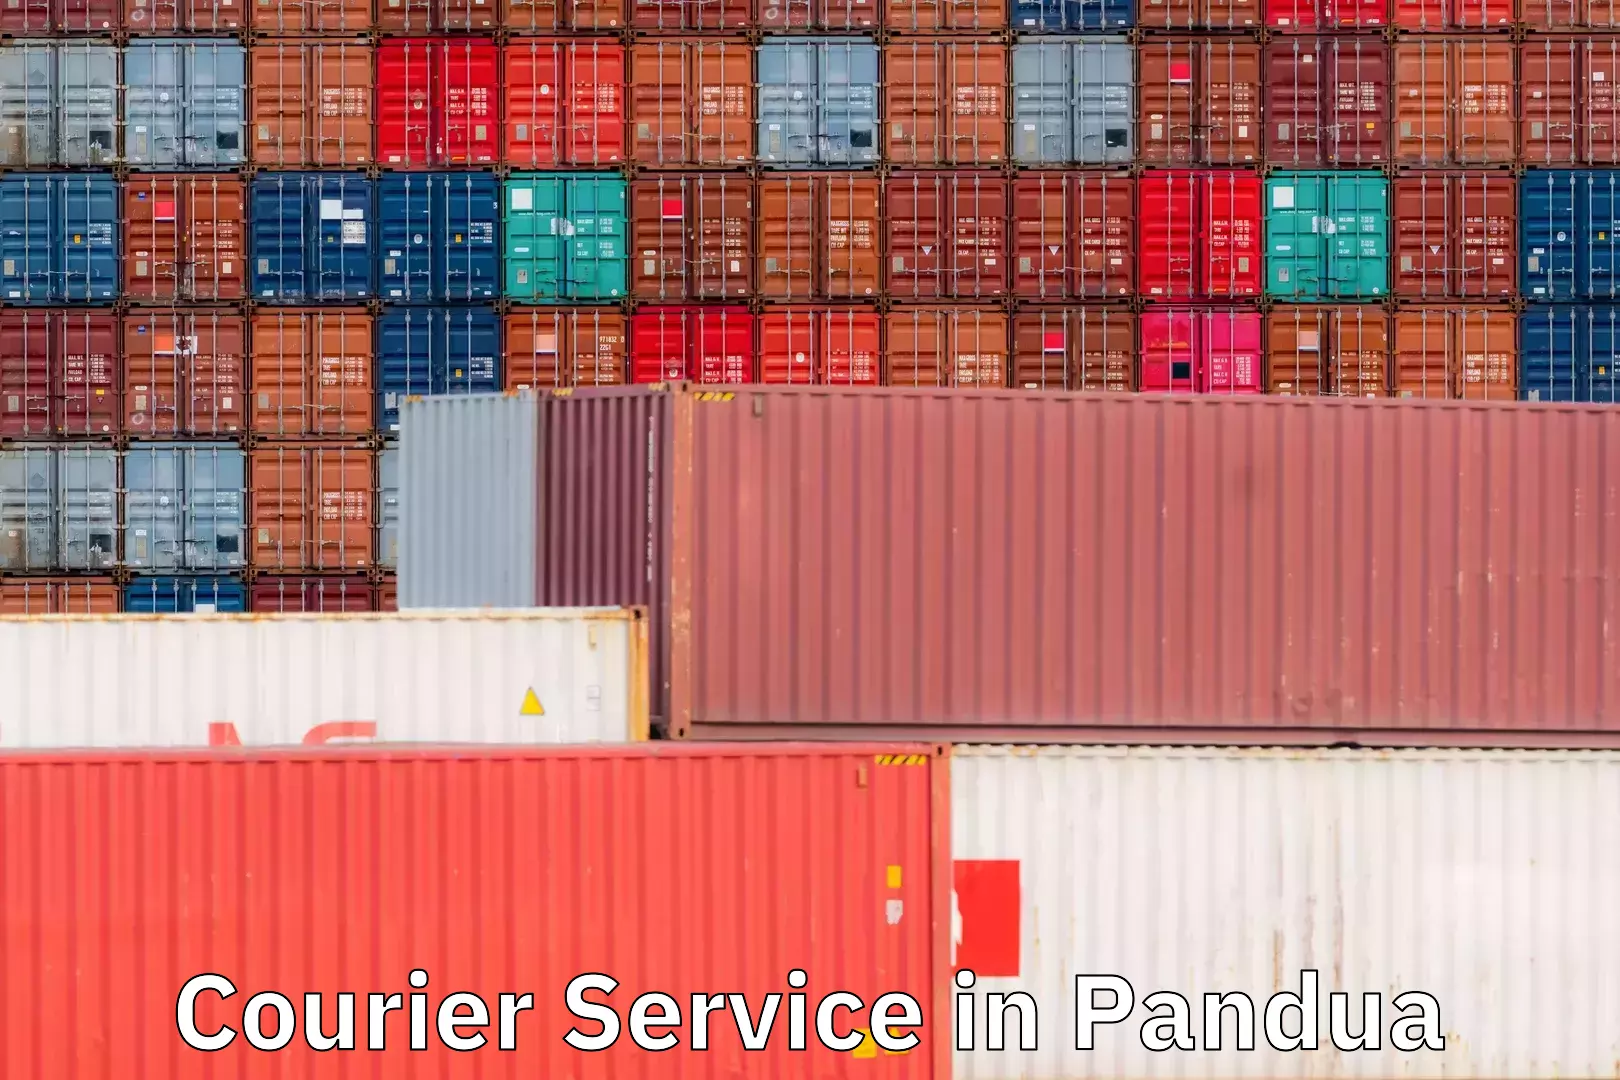 Courier service efficiency in Pandua